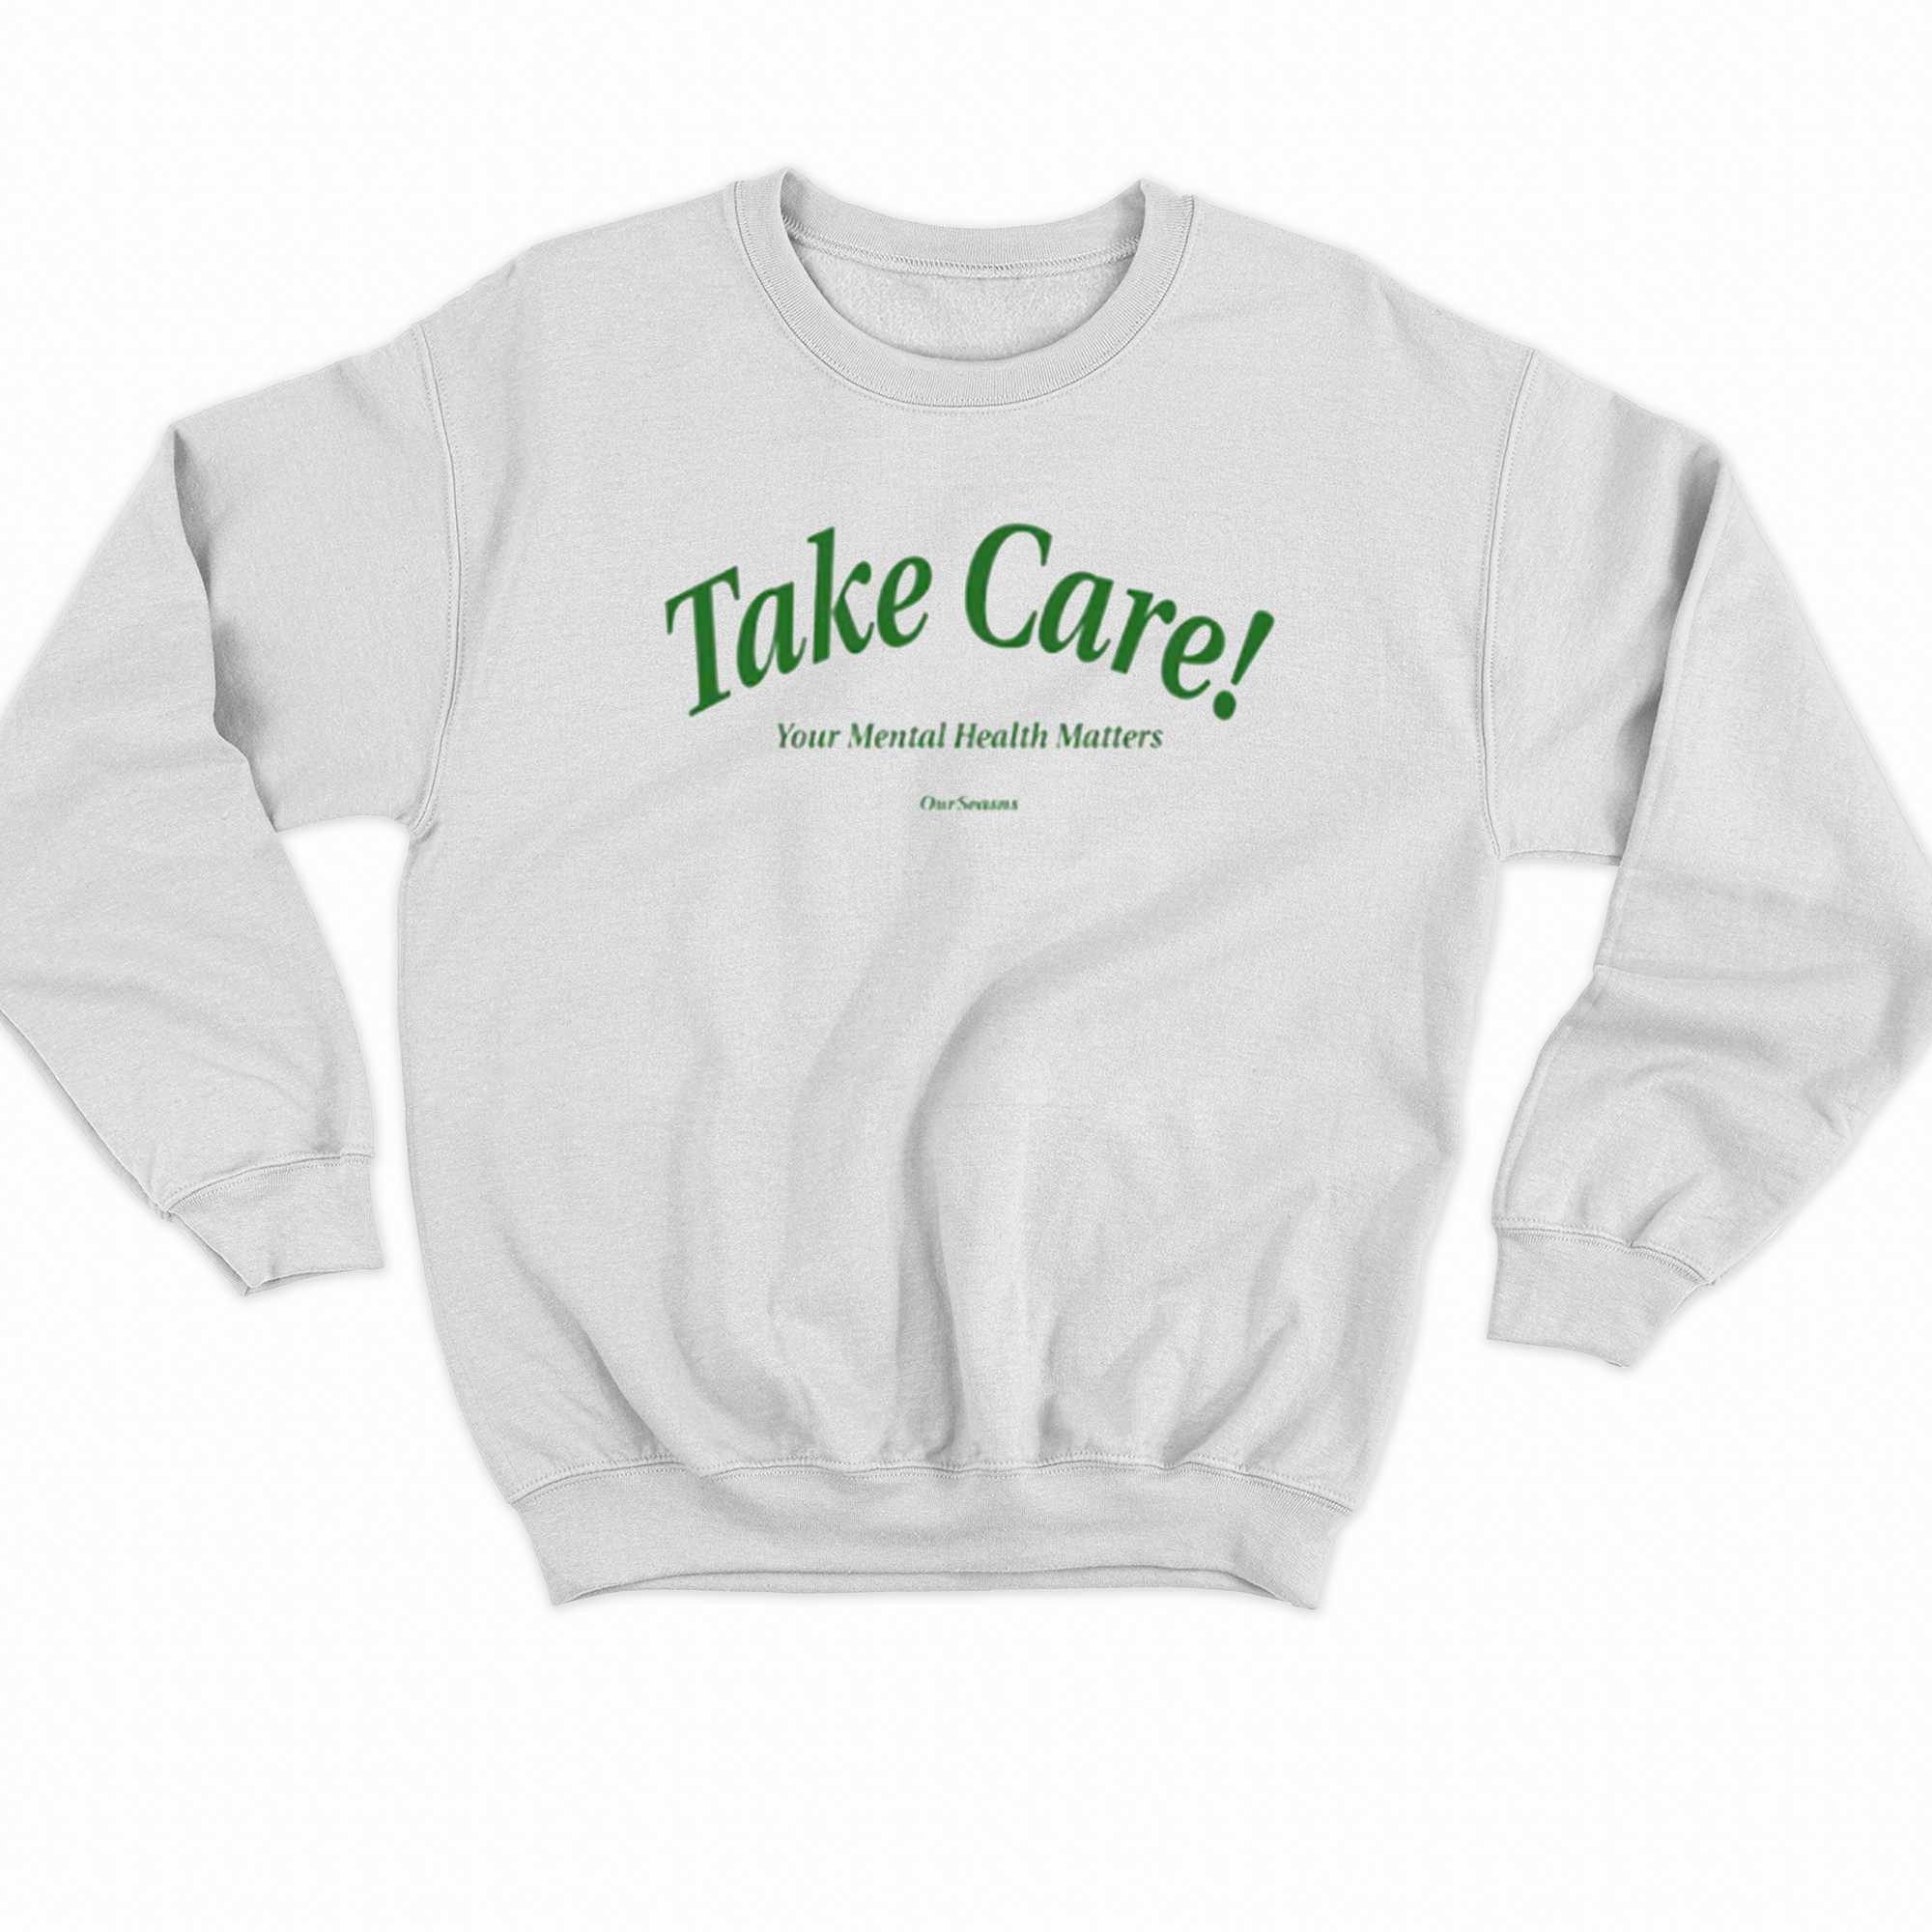 Take Care Your Mental Health Matters Sweatshirt 